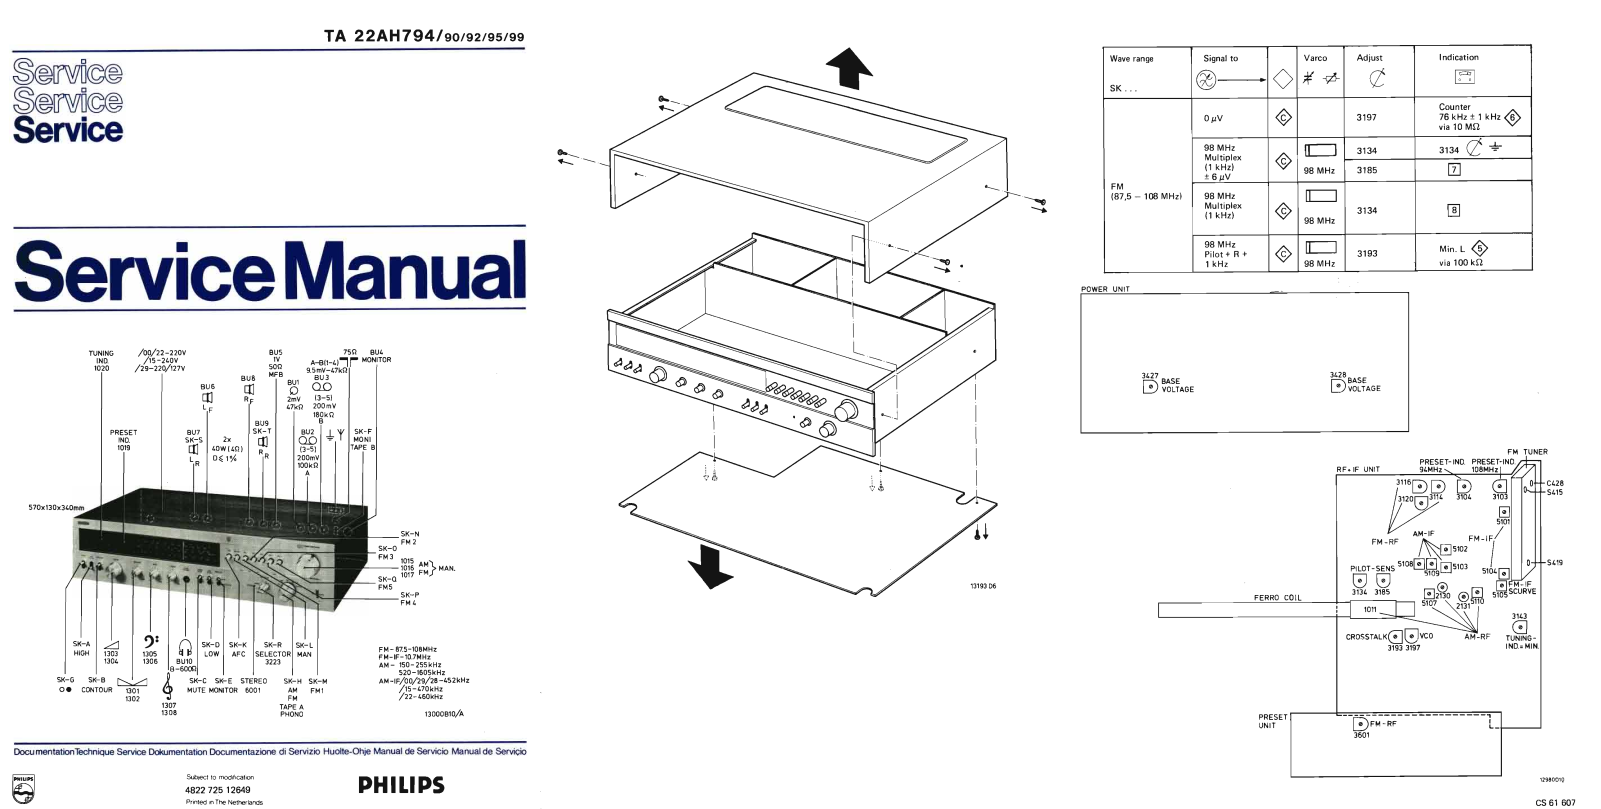 Philips AH-794 Service Manual